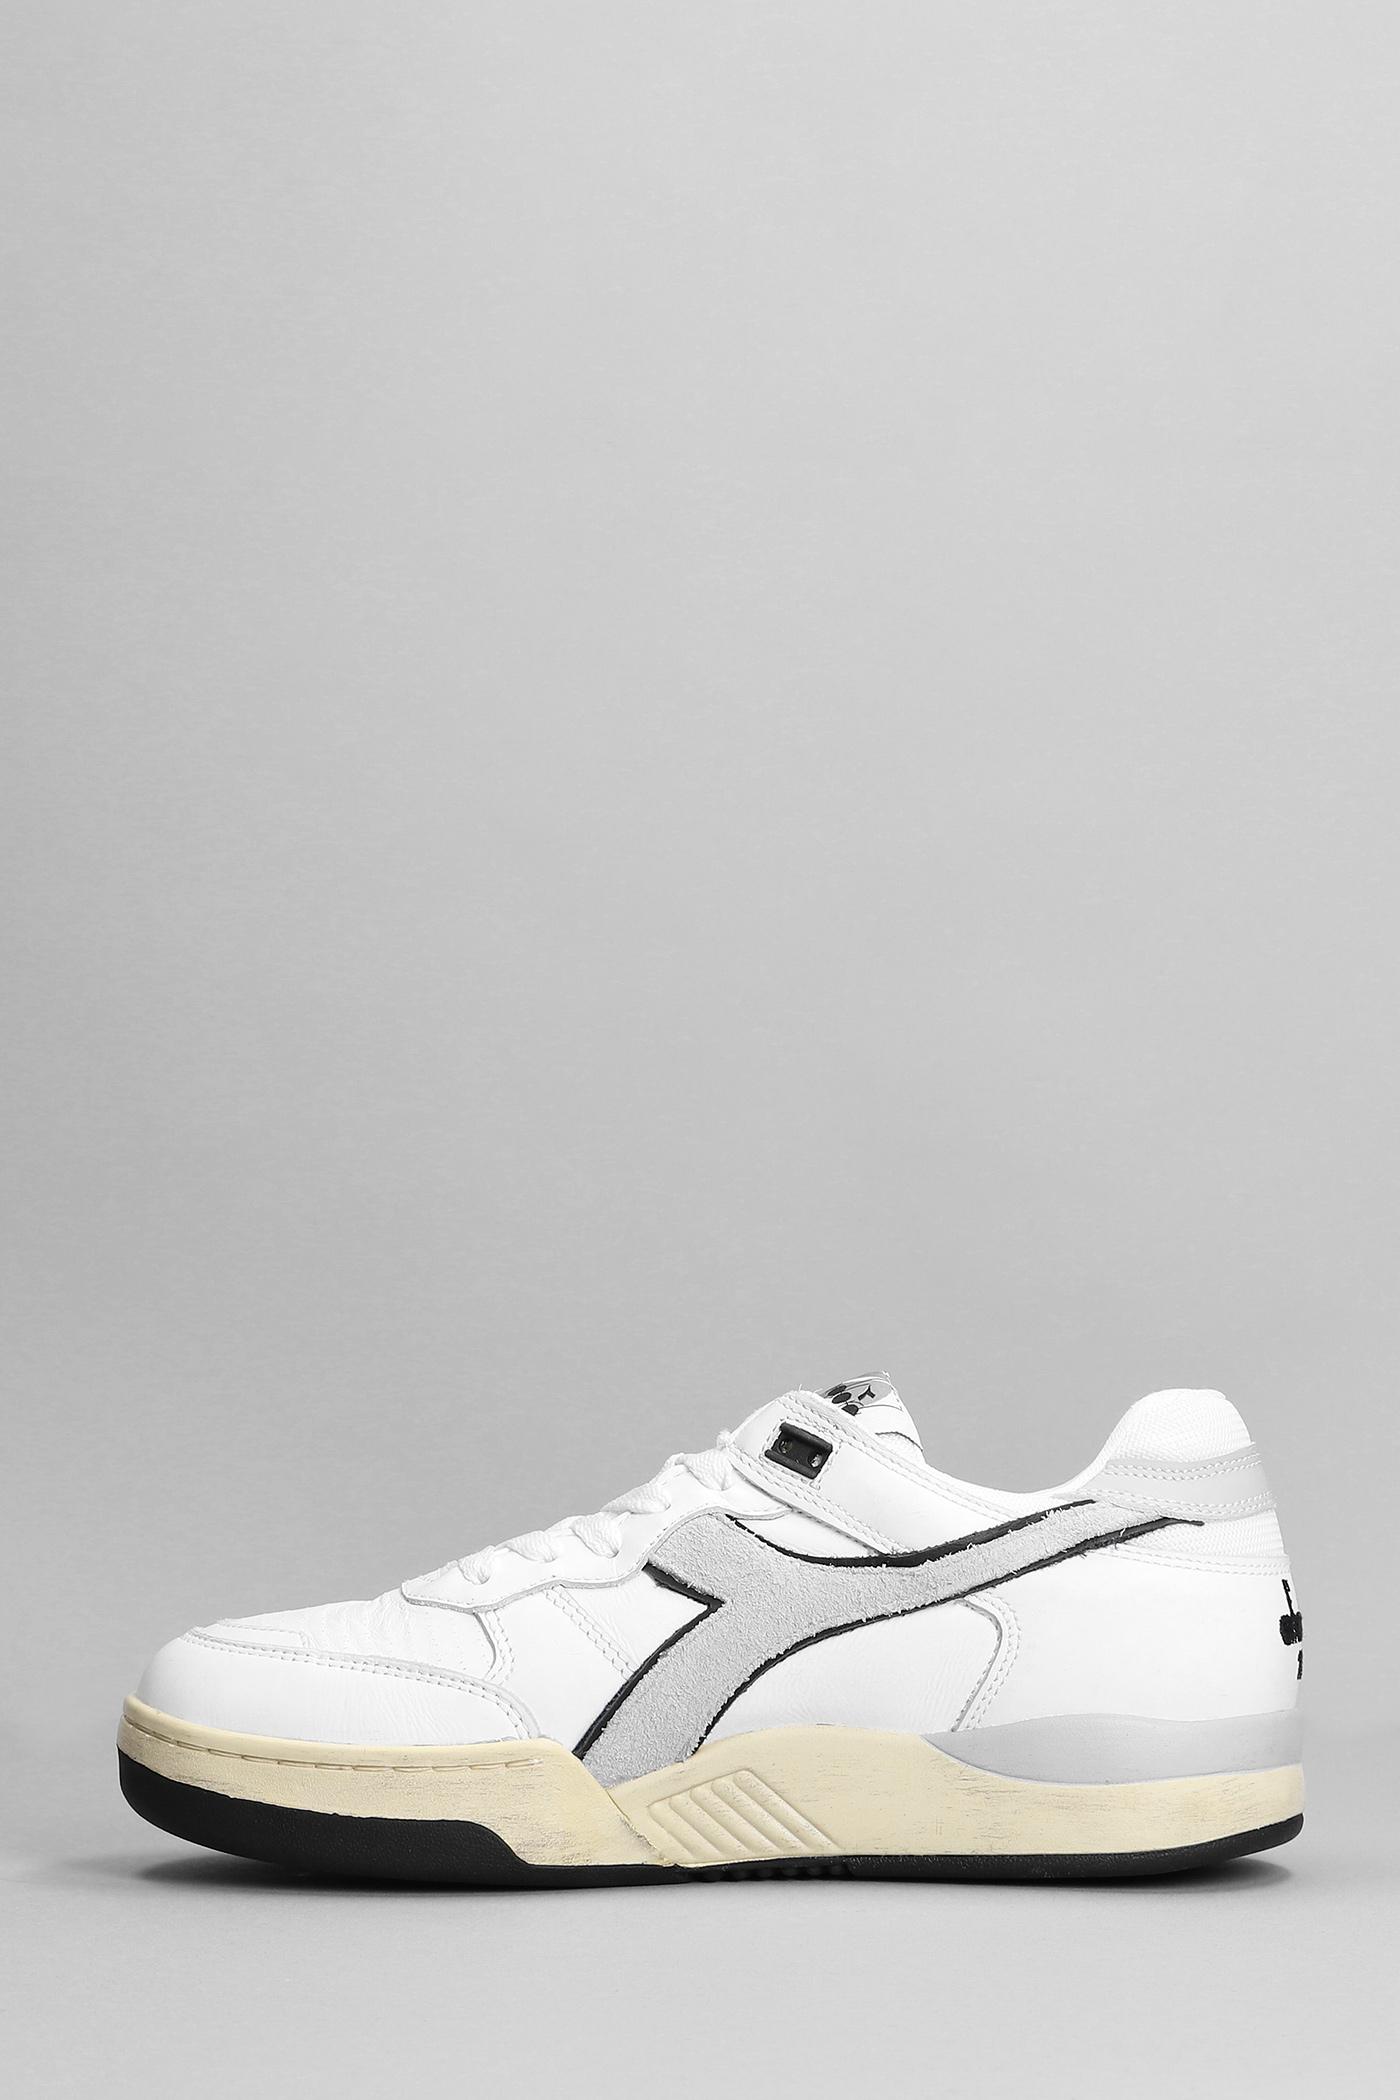 Diadora Boris B.560 Italia Sneakers In White Leather | Lyst